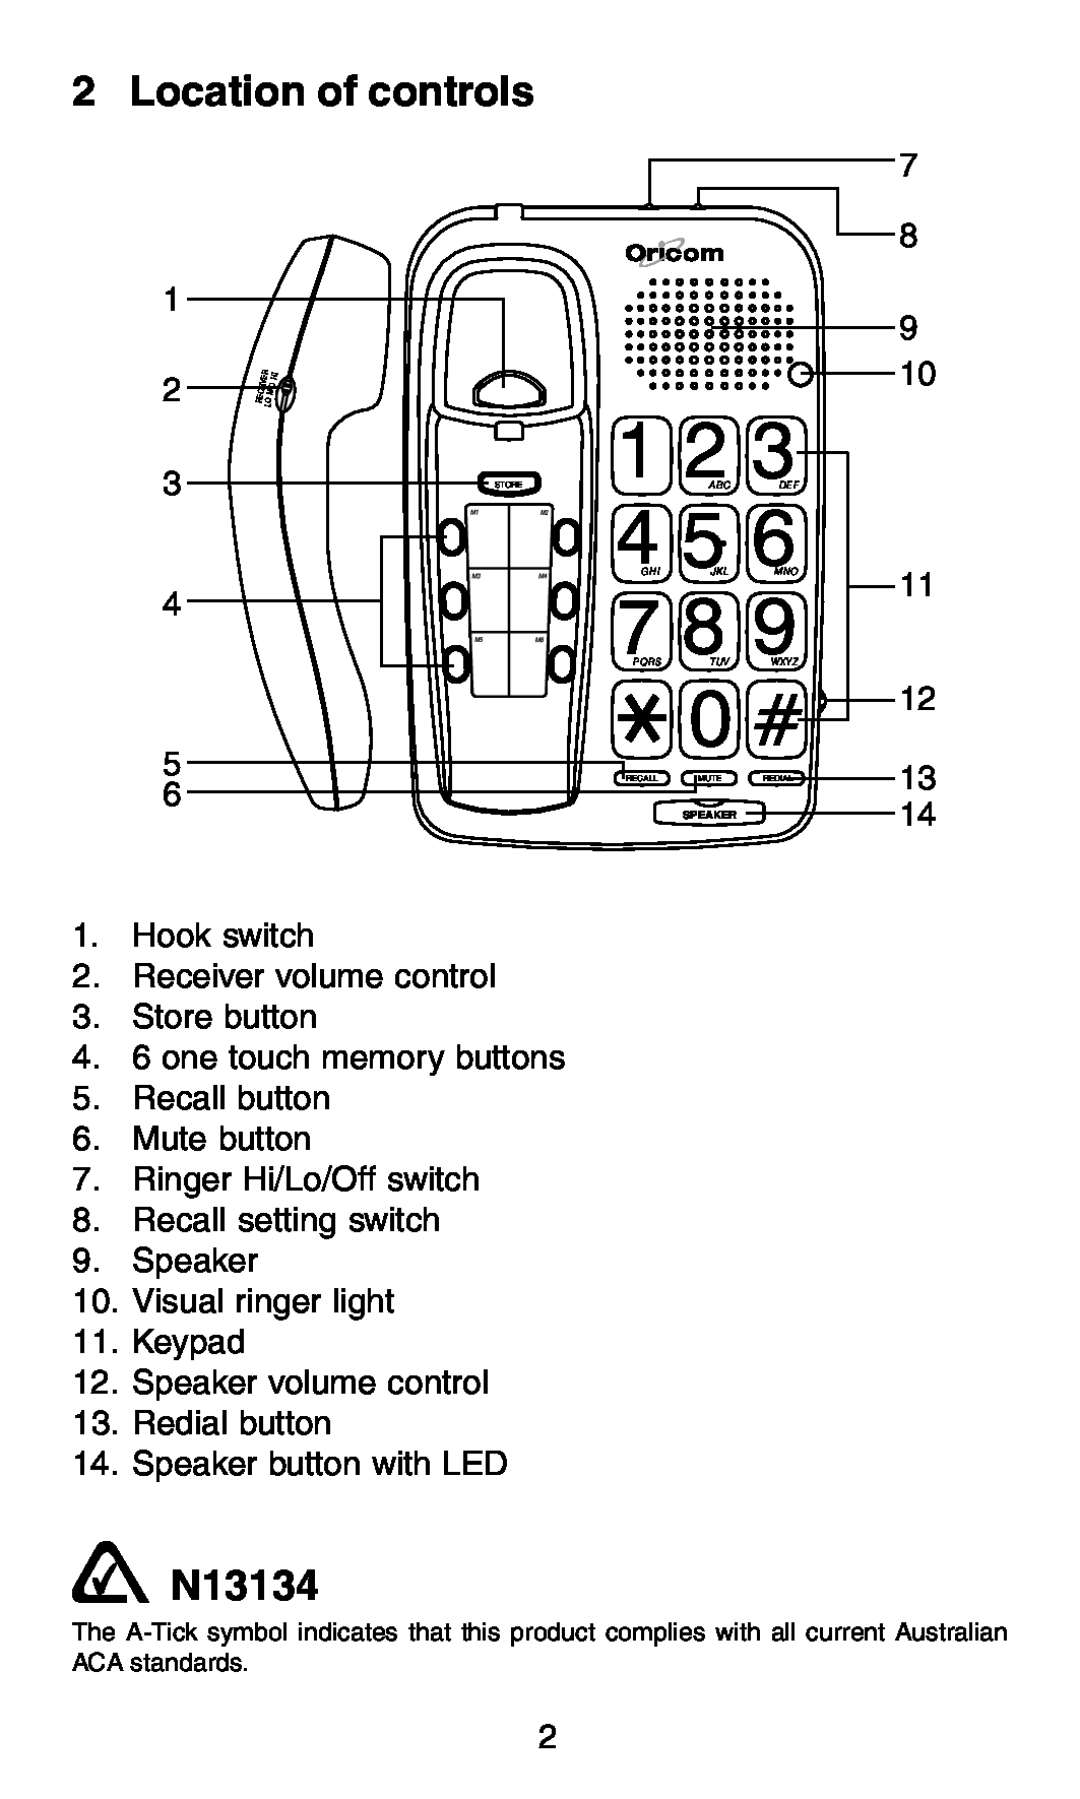 Oricom TP58 manual Location of controls, N13134 